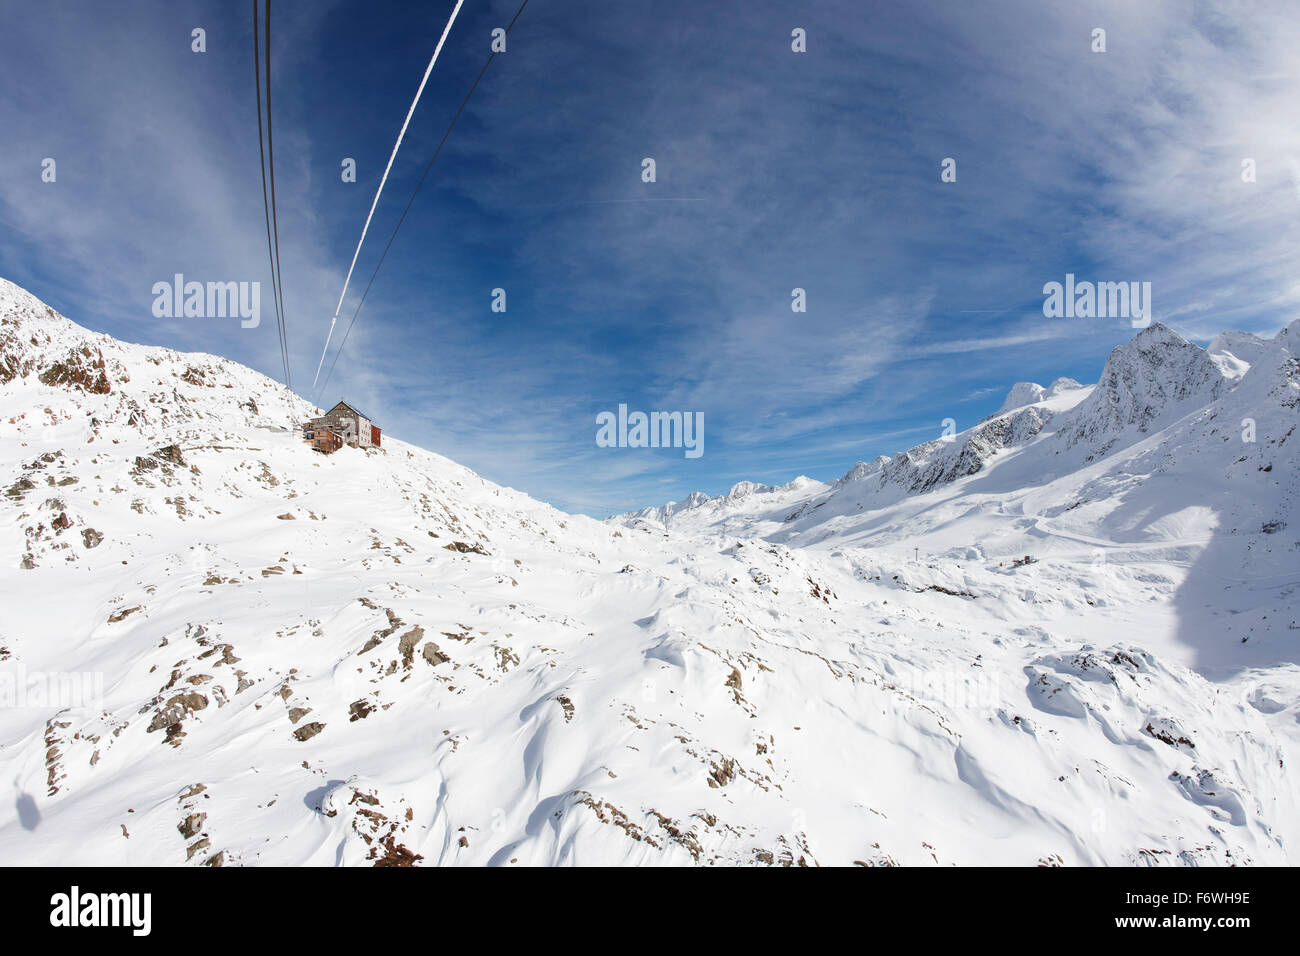 Mountain hut in snow-covered mountain scenery, Kurzras, Schnalstal, South Tyrol, Alto Adige, Italy Stock Photo